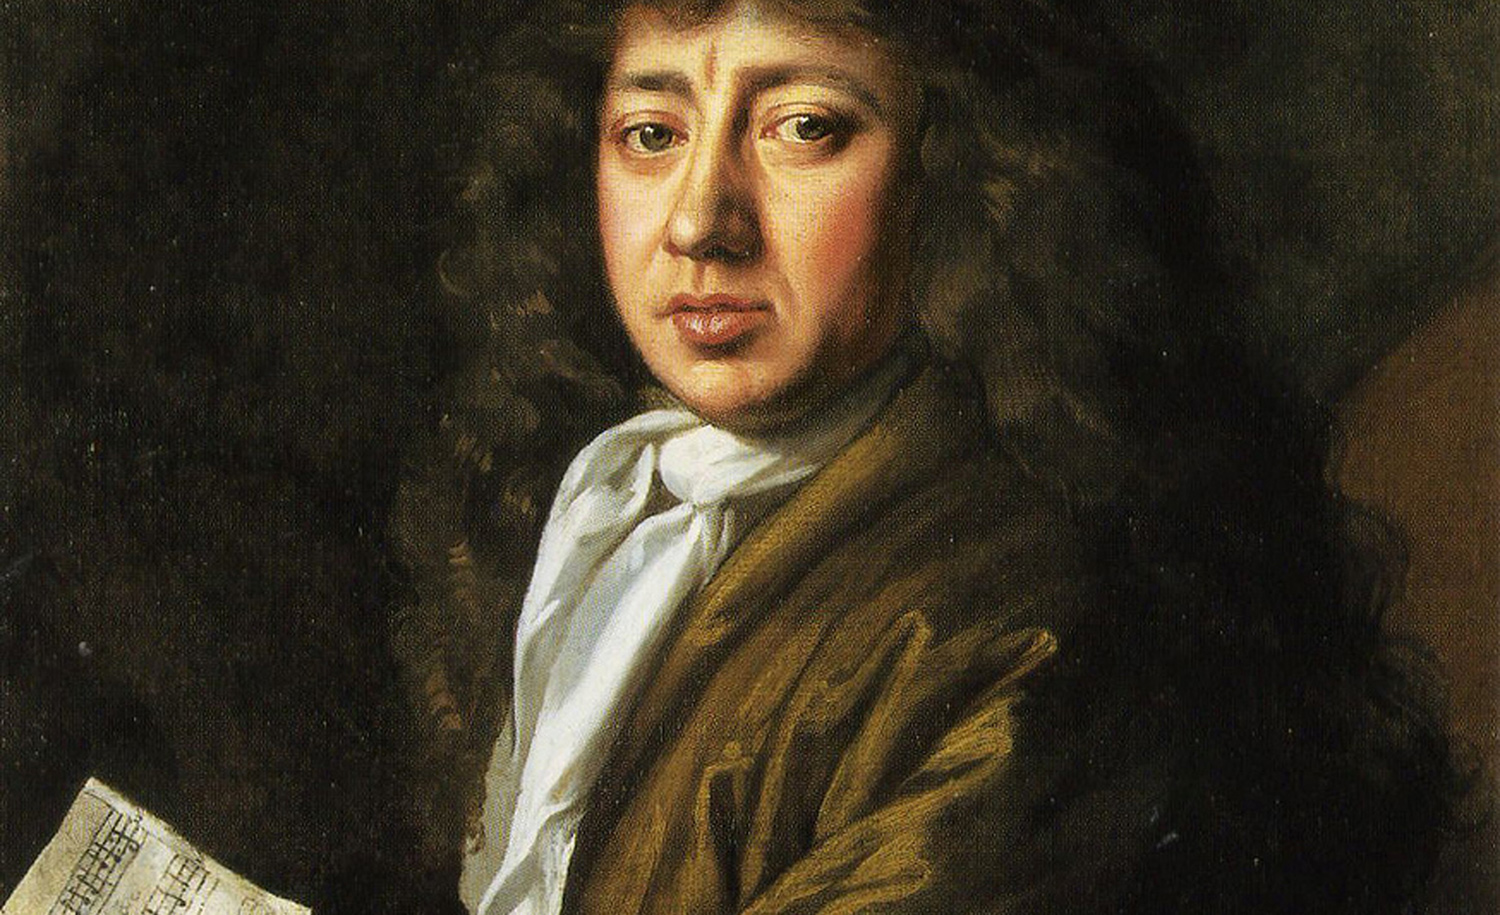  Painting of Samuel Pepys by John Hayls, 1666. Wikipedia.
